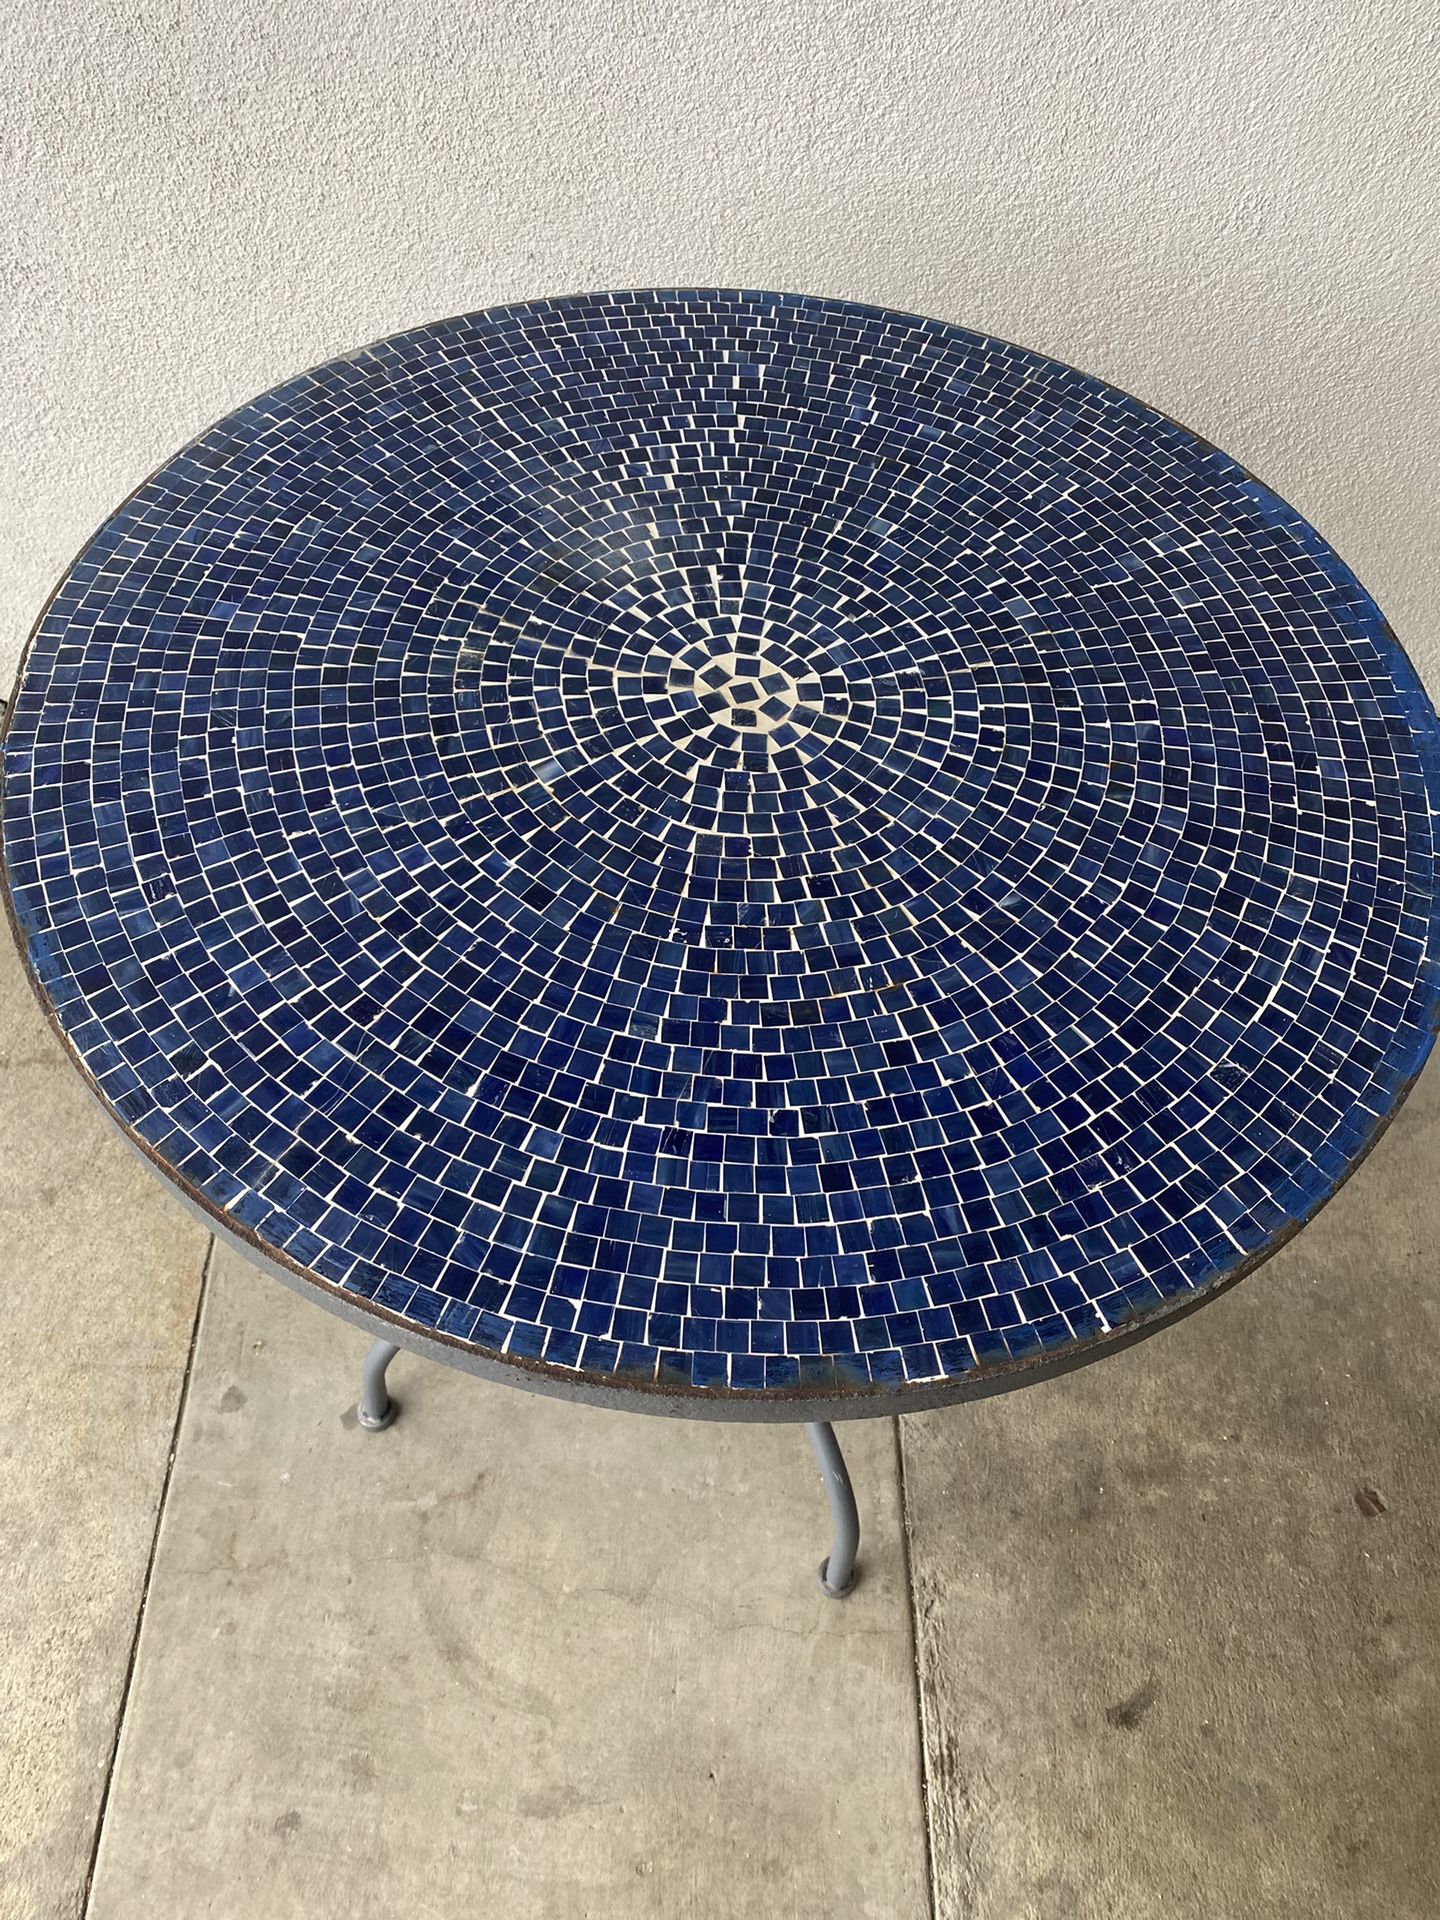 Blue - Mosaic - Tile - Table - 28” Diameter - 30.5” Tall - Grey Legs & Edge